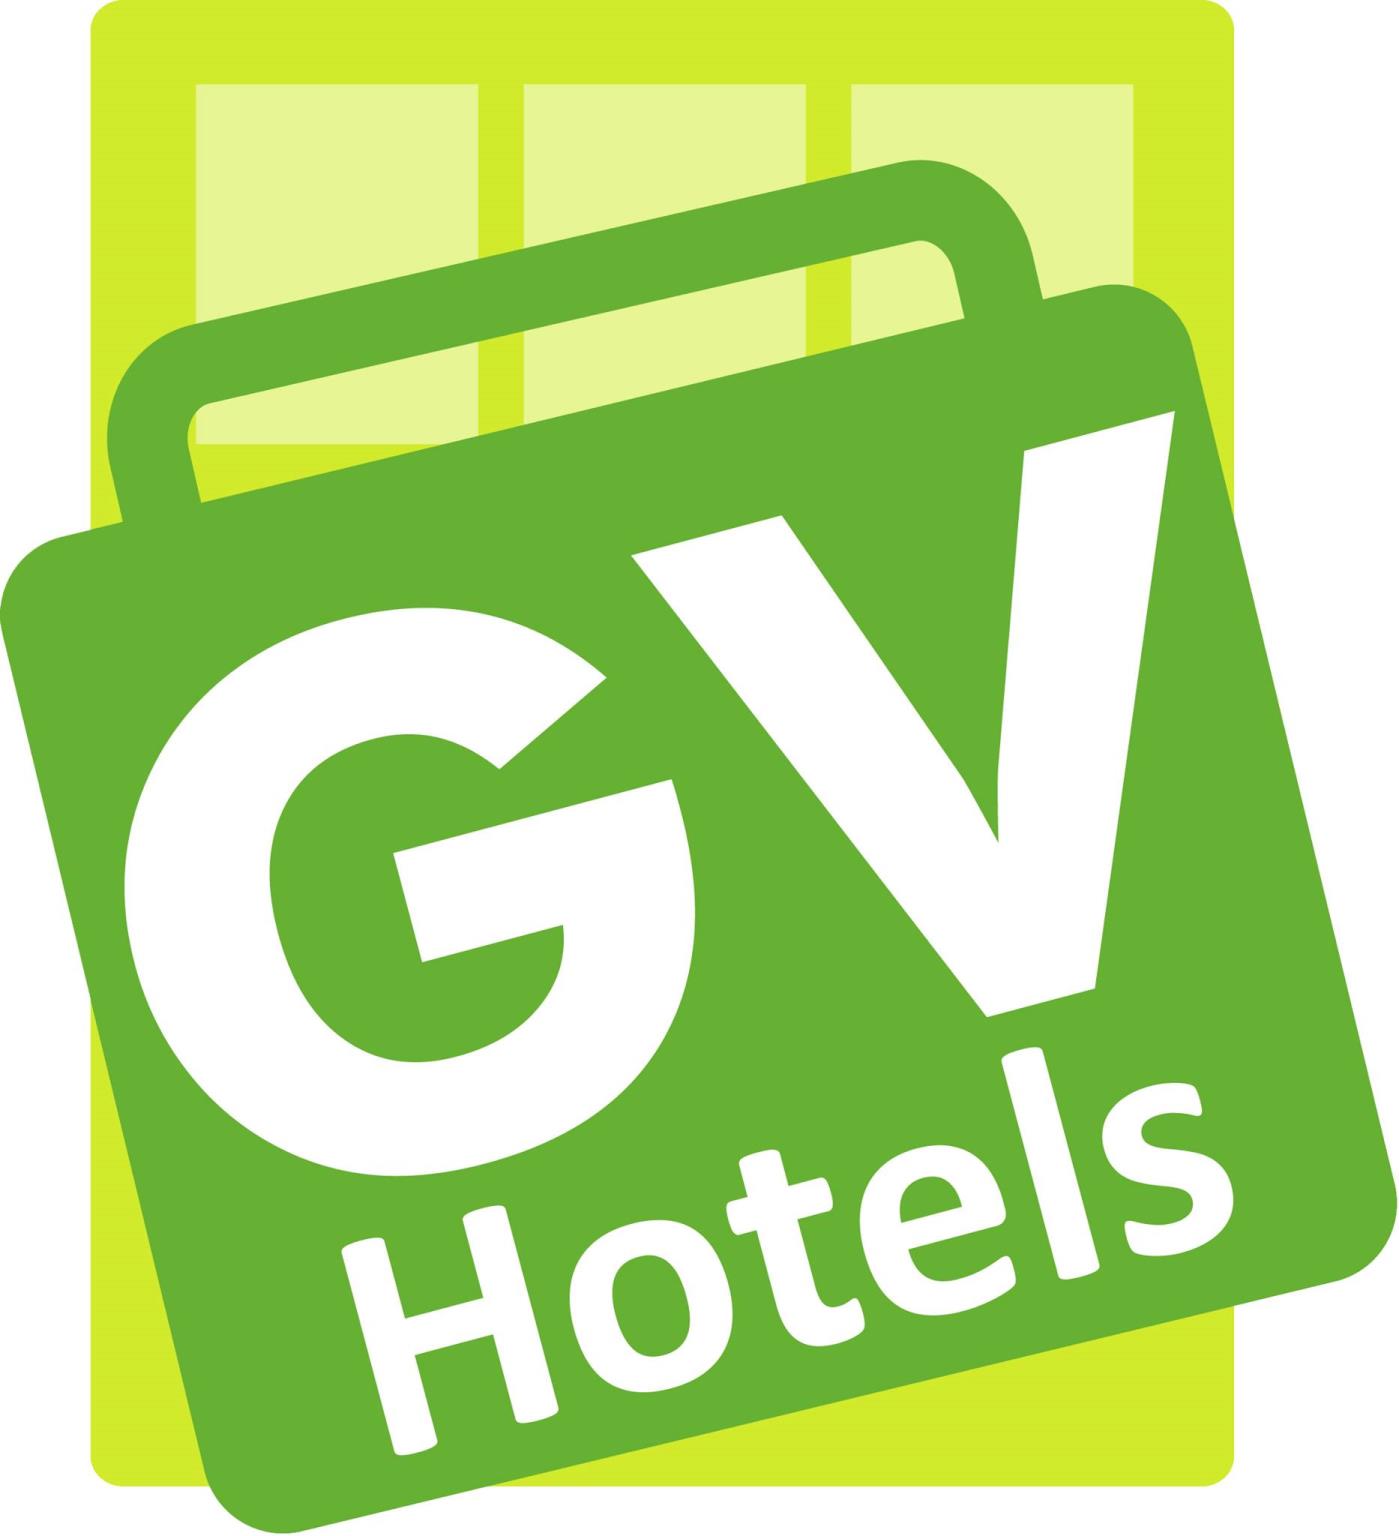 GV Hotel - Valencia image 1